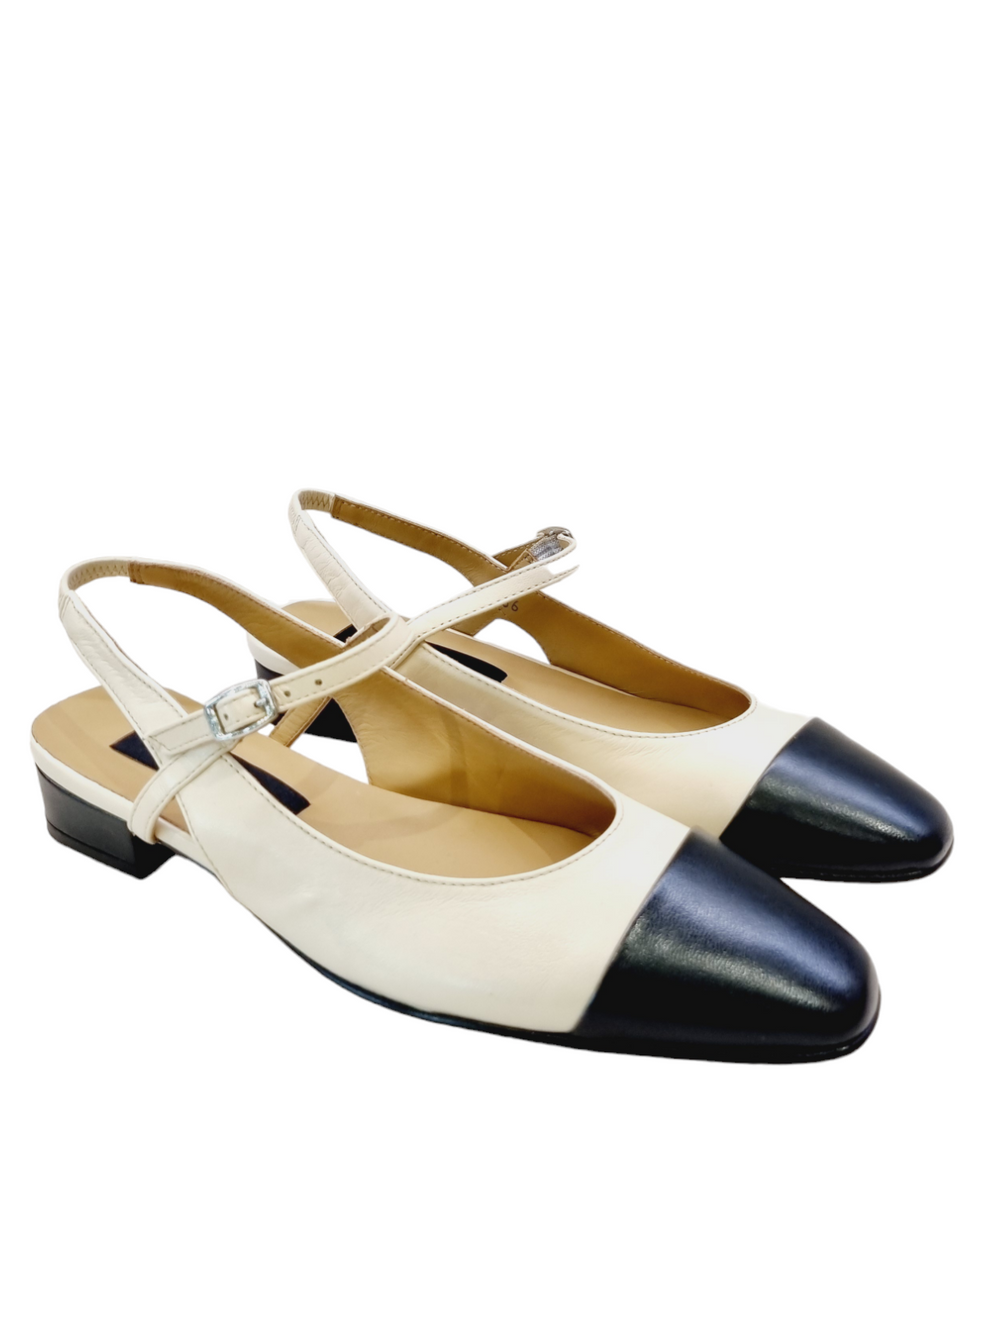 Oceano Flat Sling-Back - Carel Paris - Liberty Shoes Australia